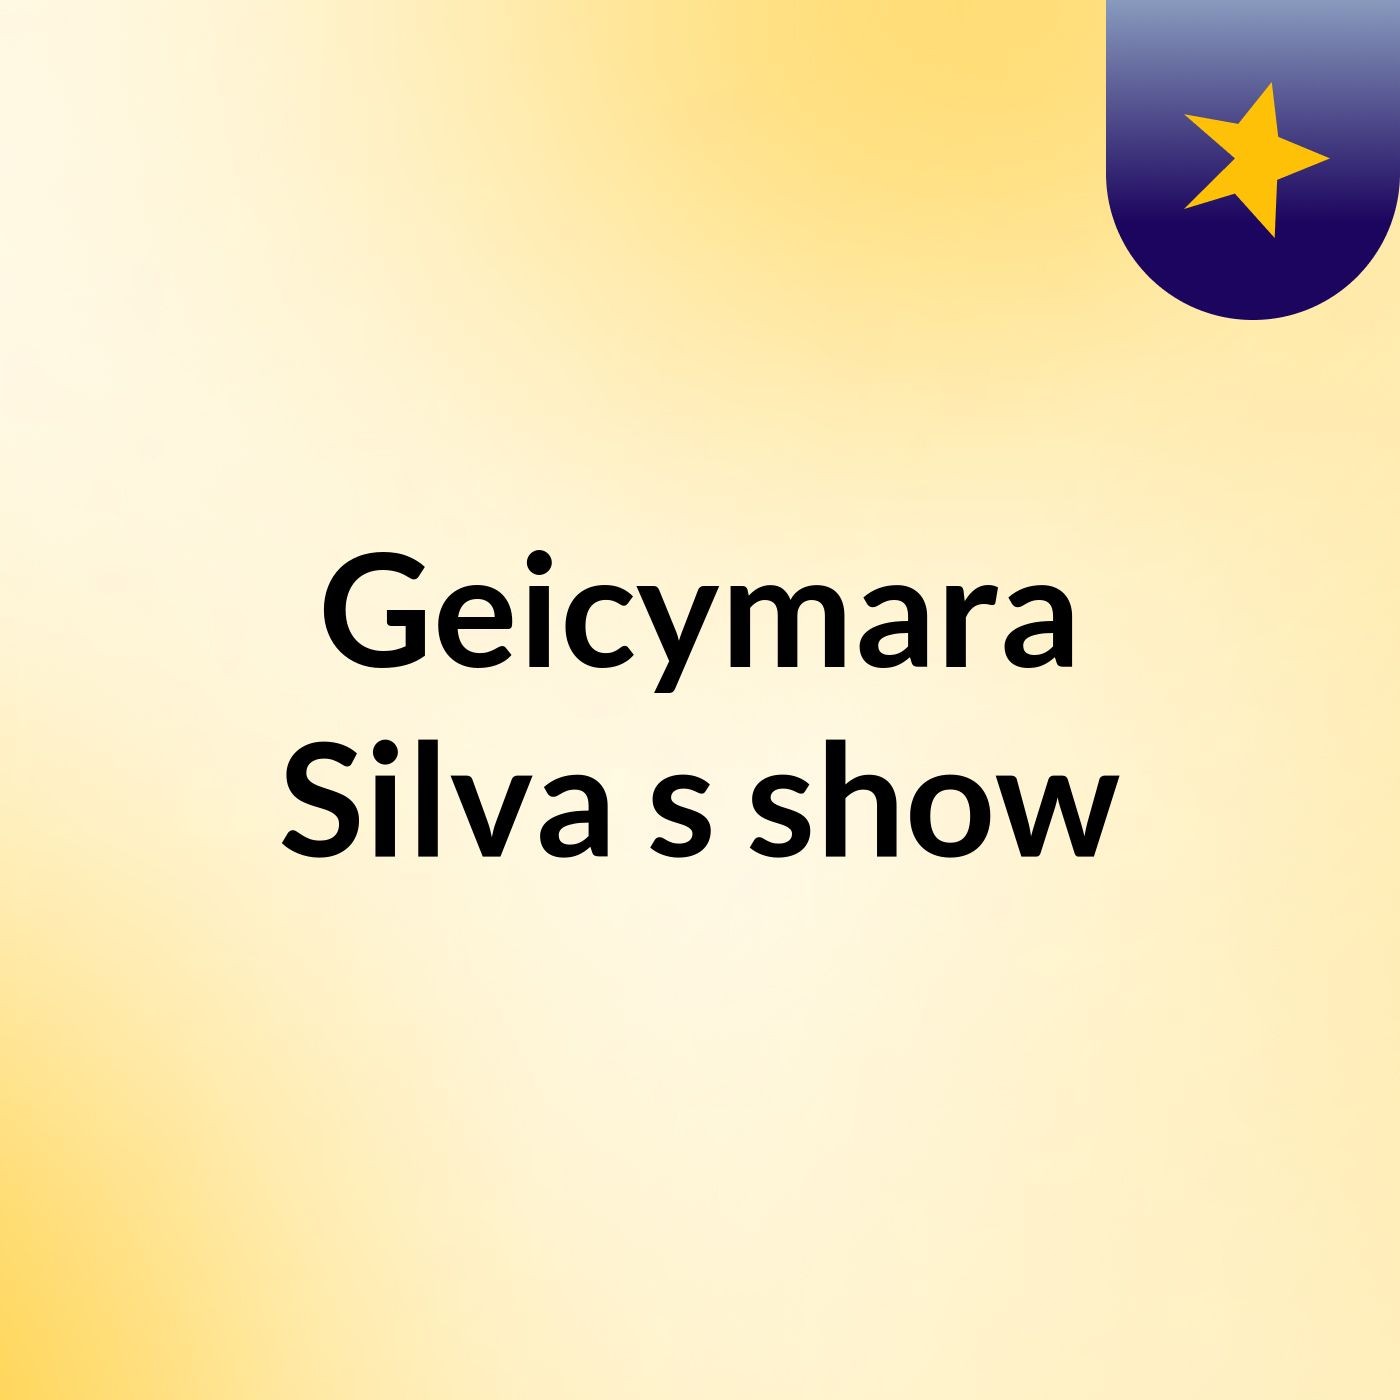 Geicymara Silva's show